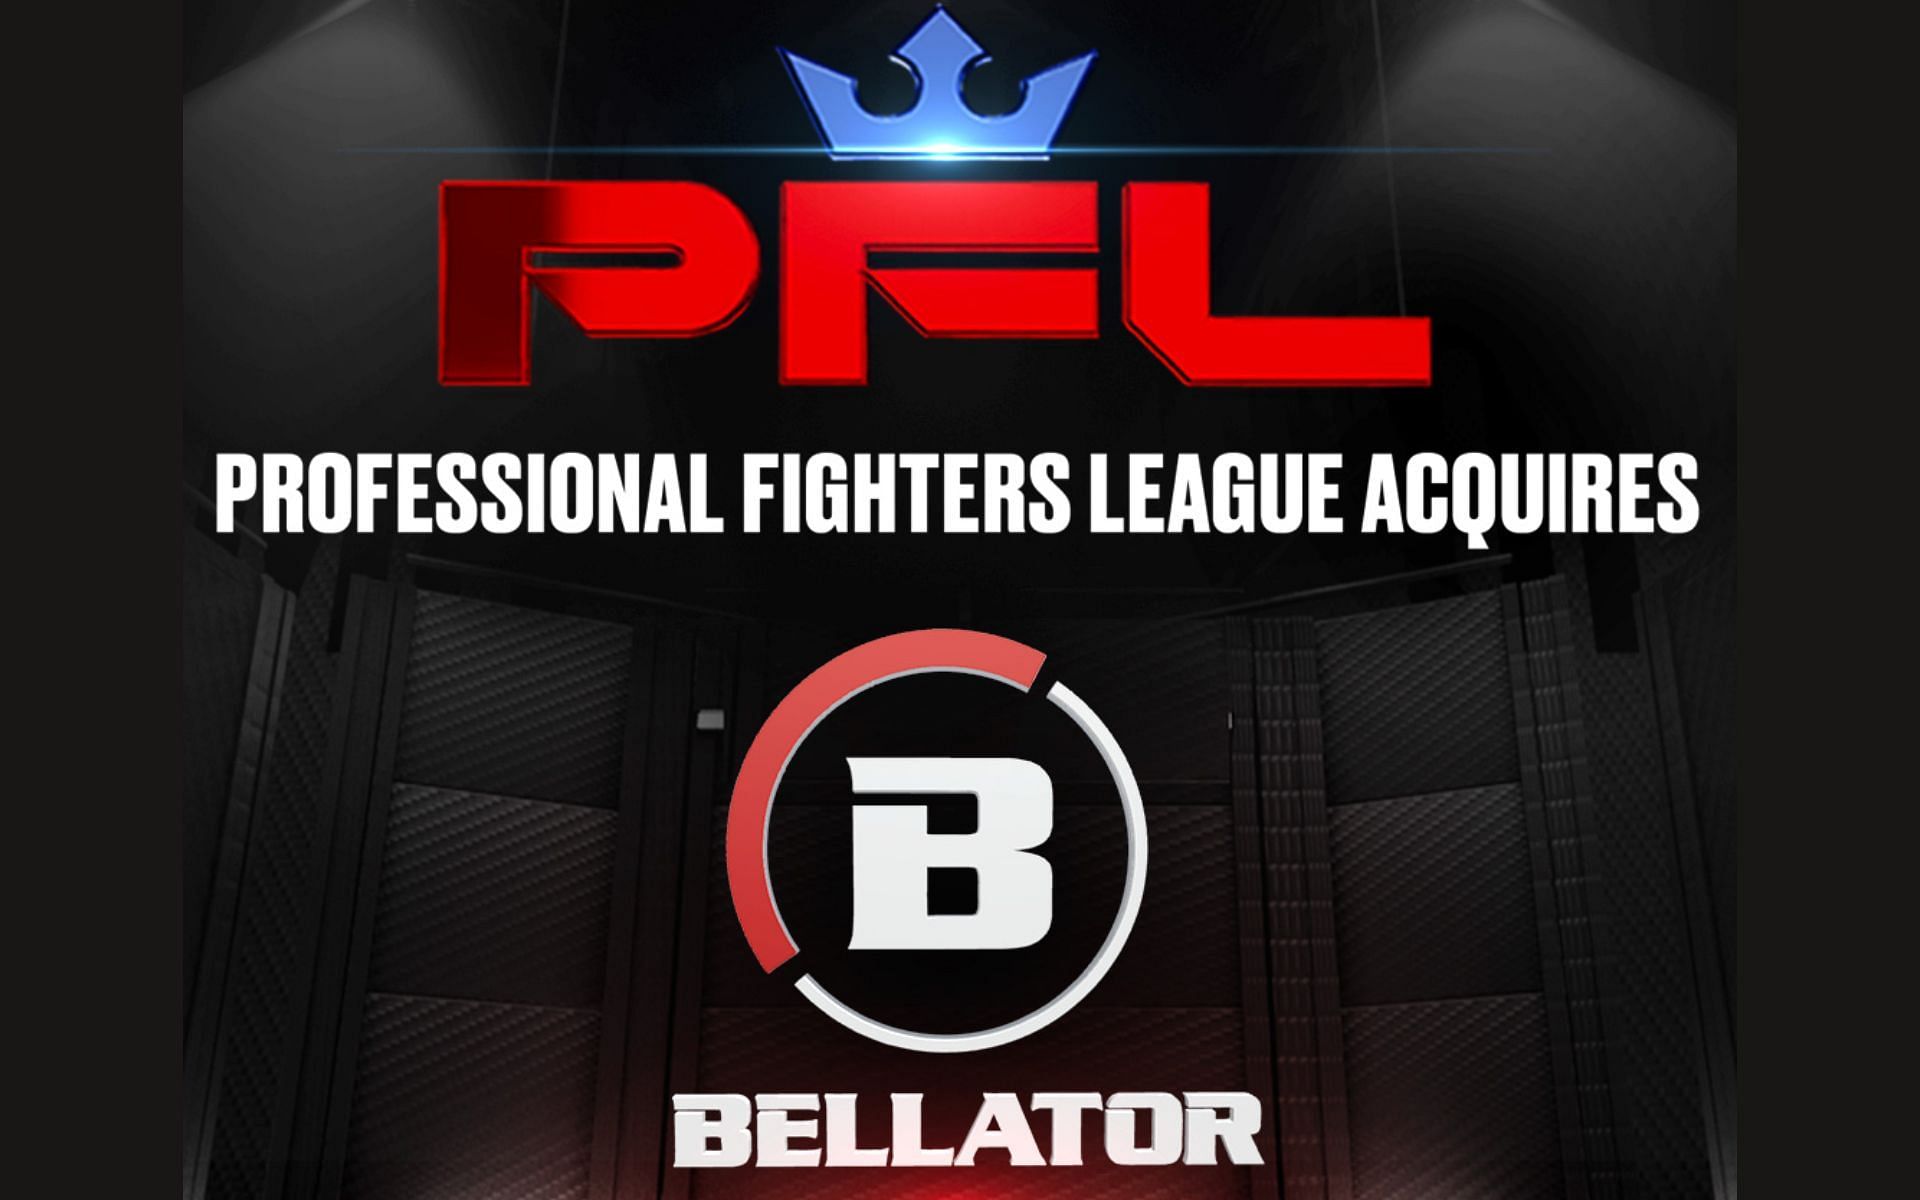 PFL acquires Bellator. [via X @DonnDavisPFL]